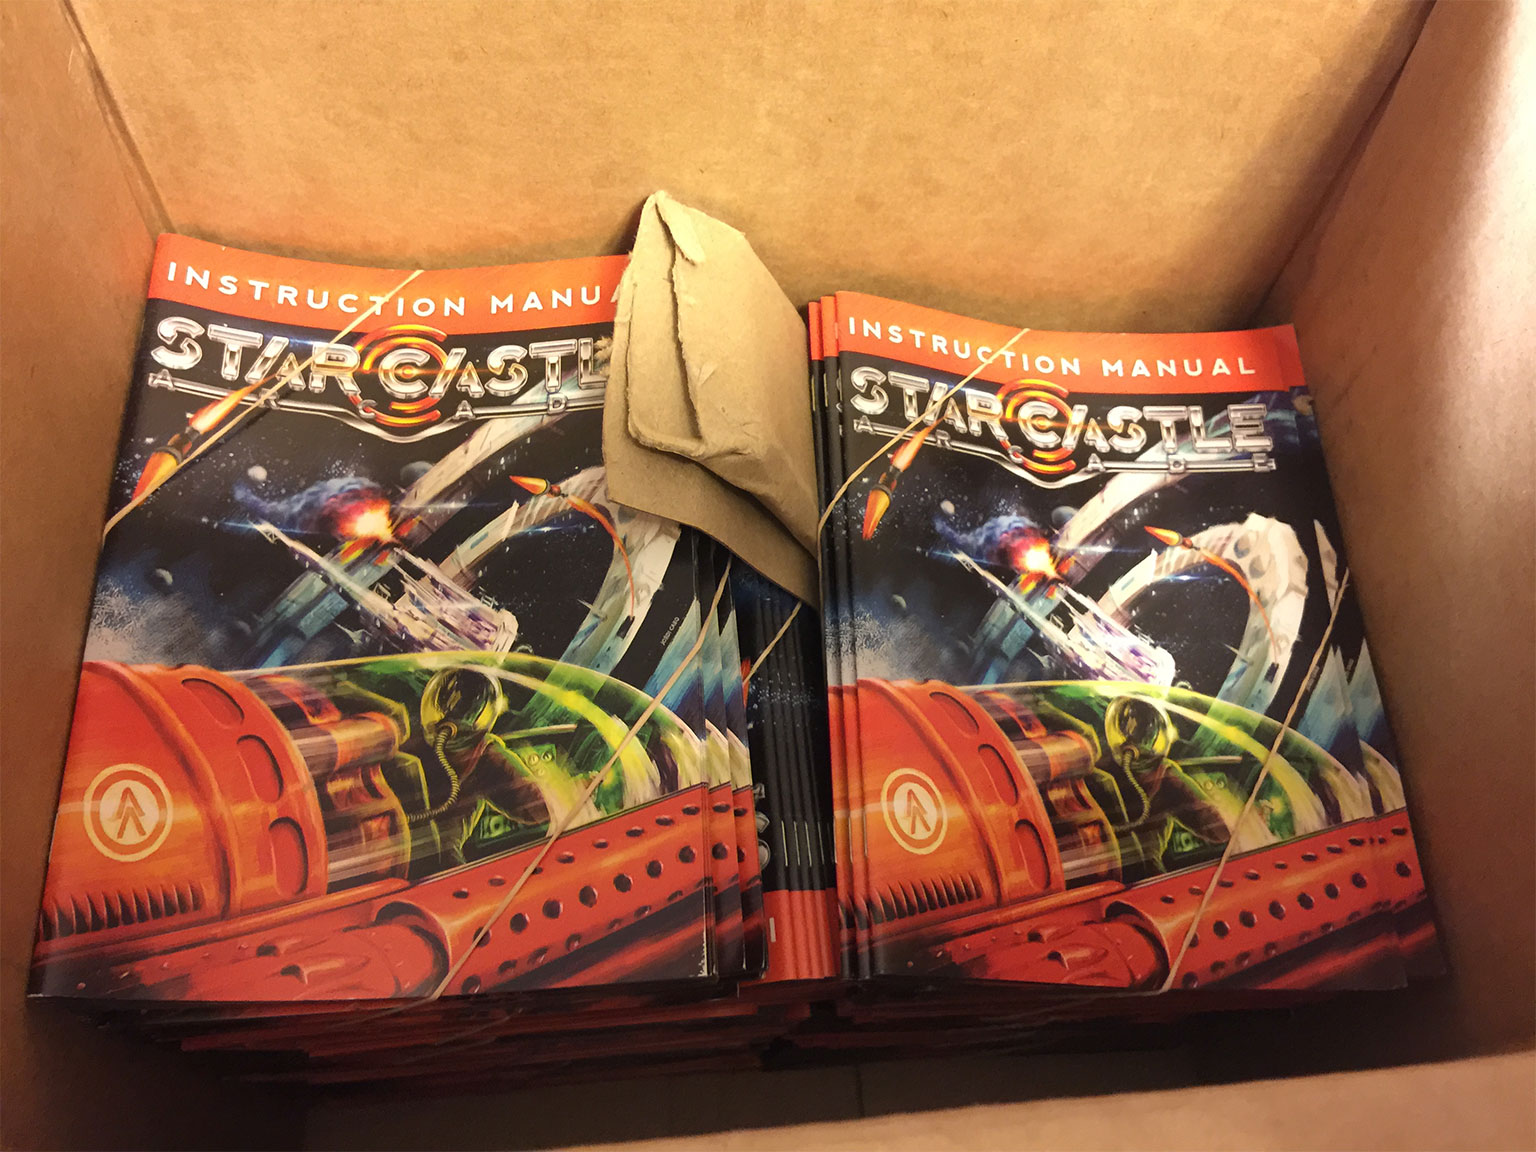 StarCastleArcade_Manuals_Arrive.jpg